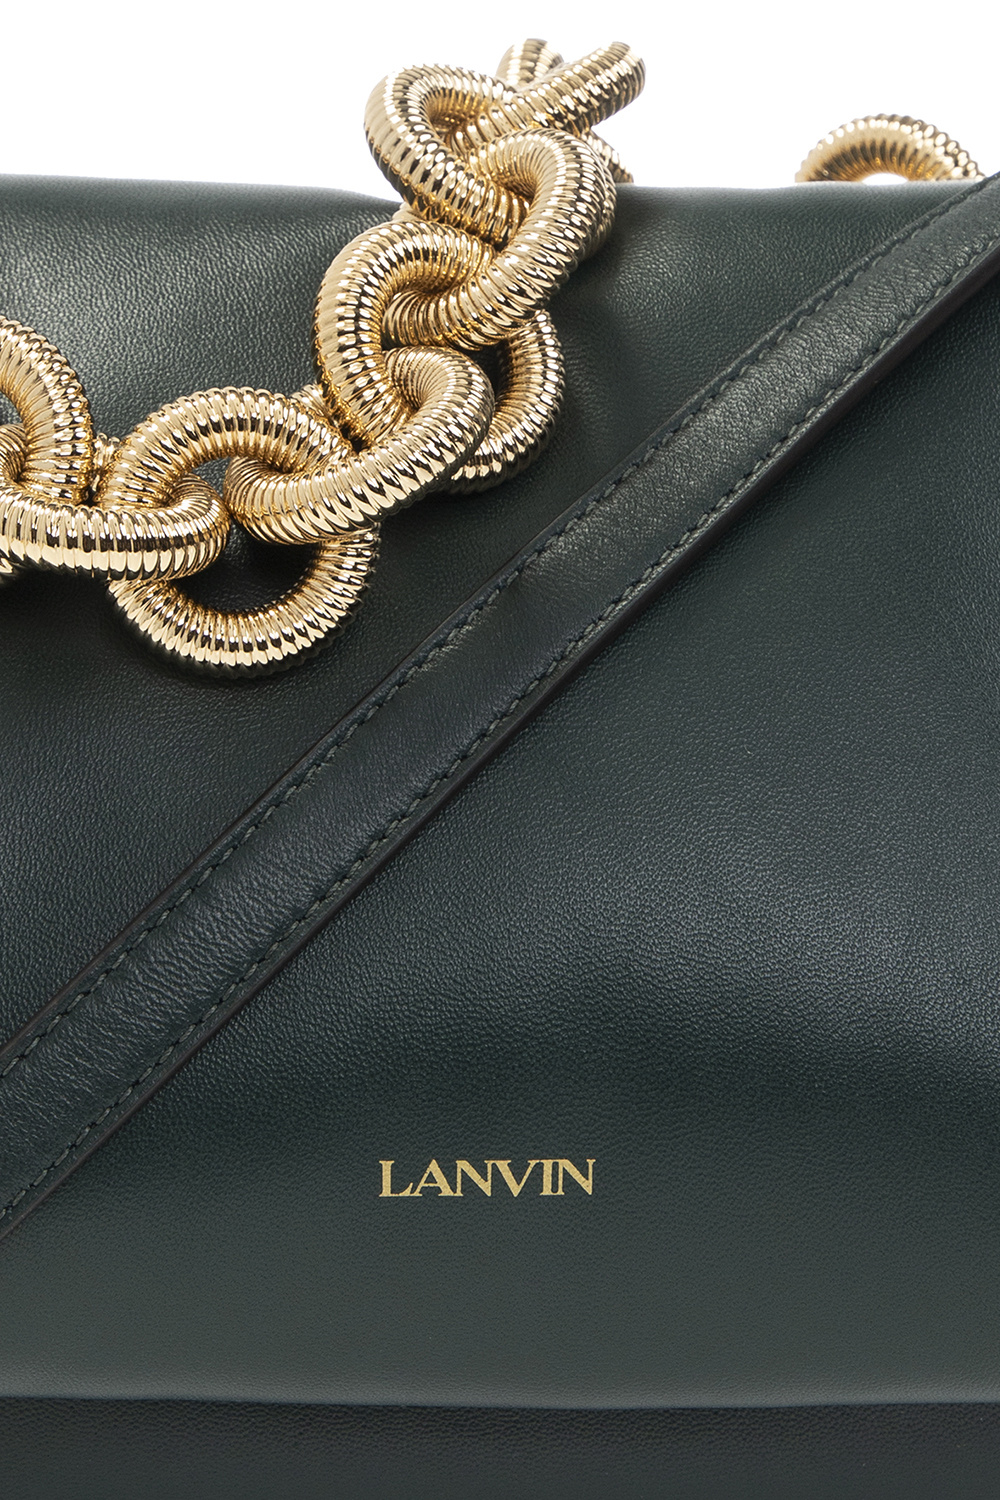 Lanvin ‘Sugar Small’ shoulder bag